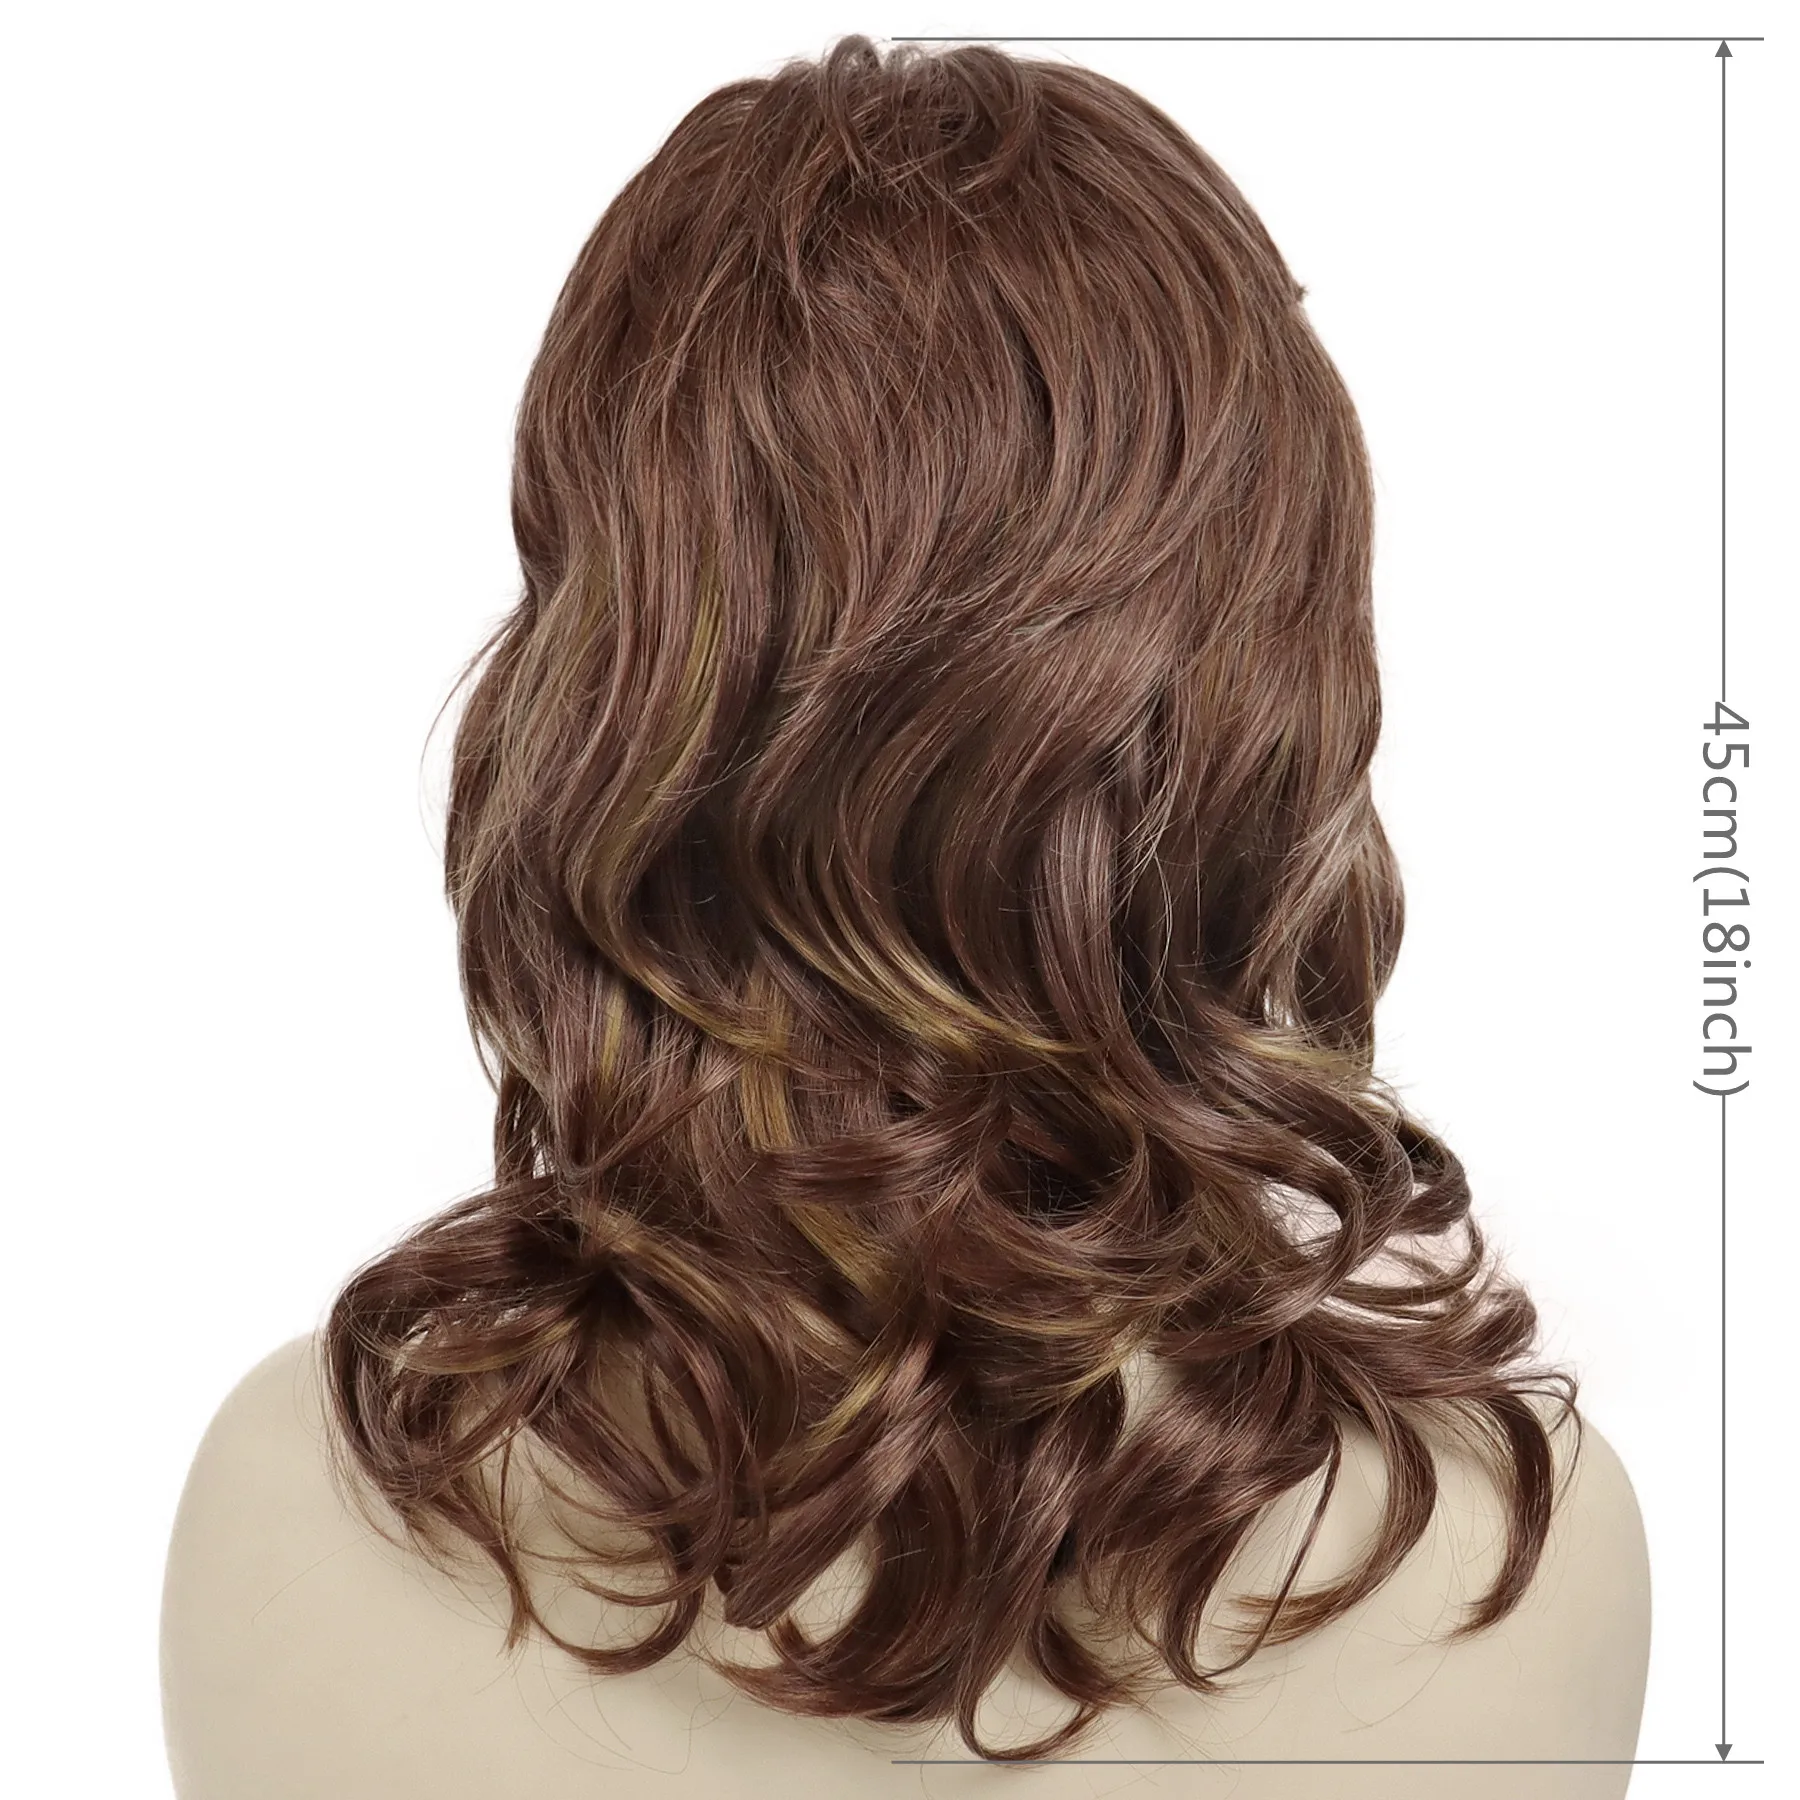 GNIMEGIL סינטטי חום לערבב בלונדינית להדגיש פאה של שיער ארוך ומסולסל טבעי גל פאה לנשים יומי מסיבת ליל כל הקדושים Regualr הפאה - 1